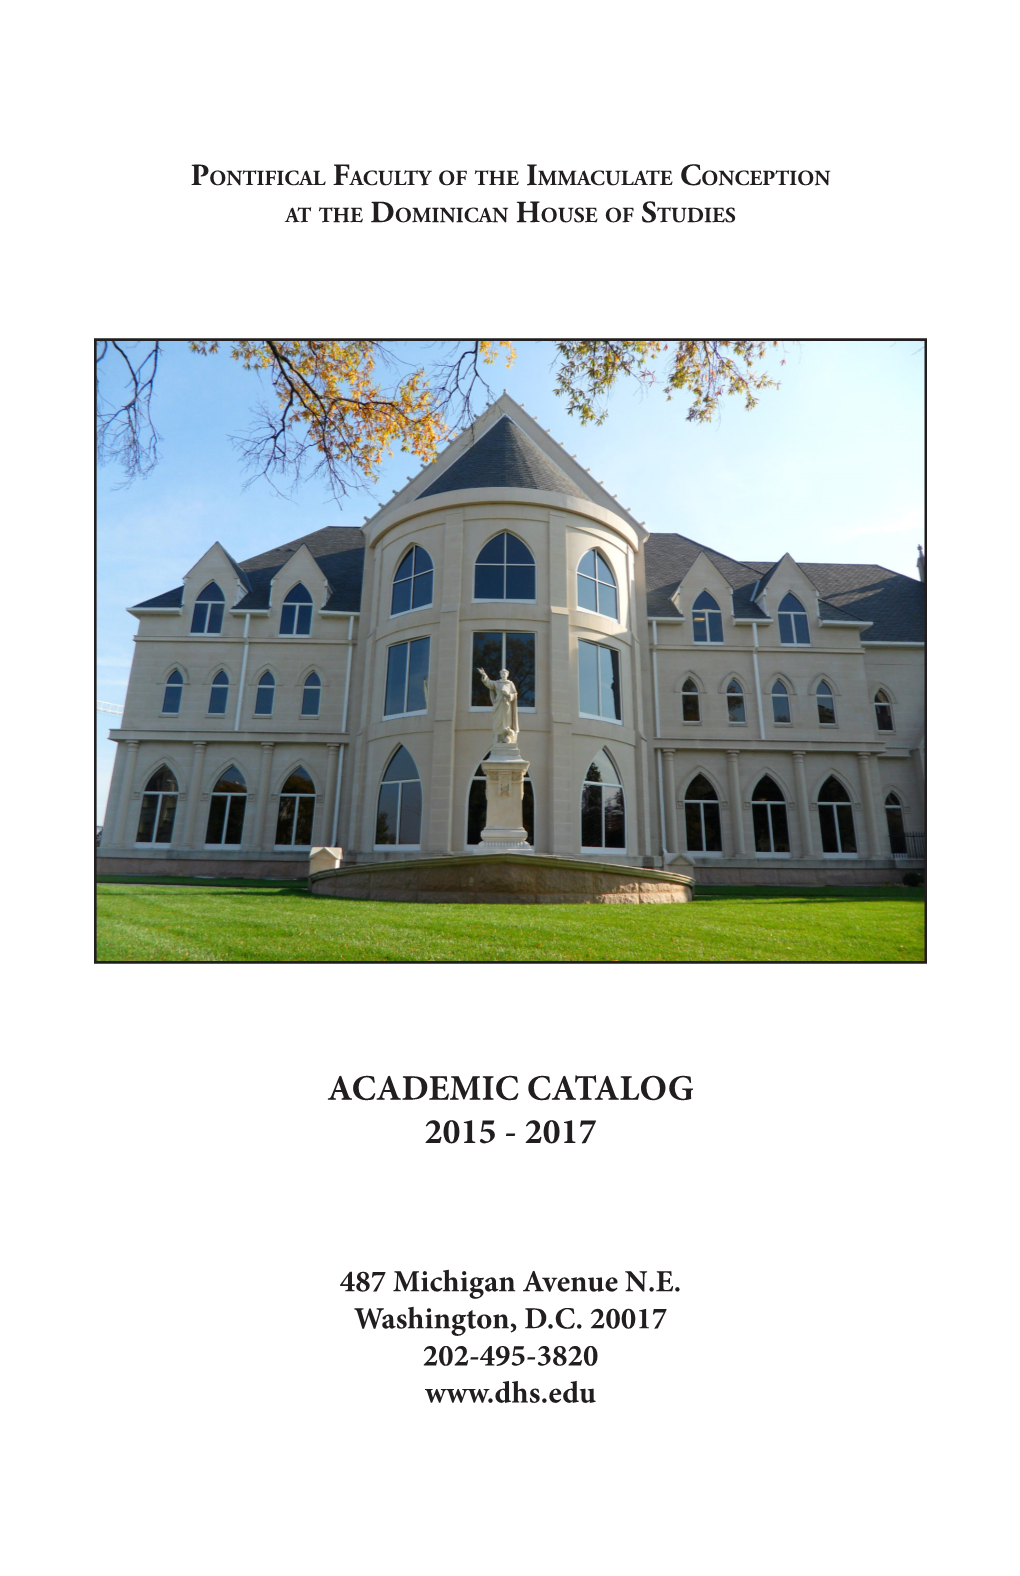 Academic Catalog 2015 - 2017